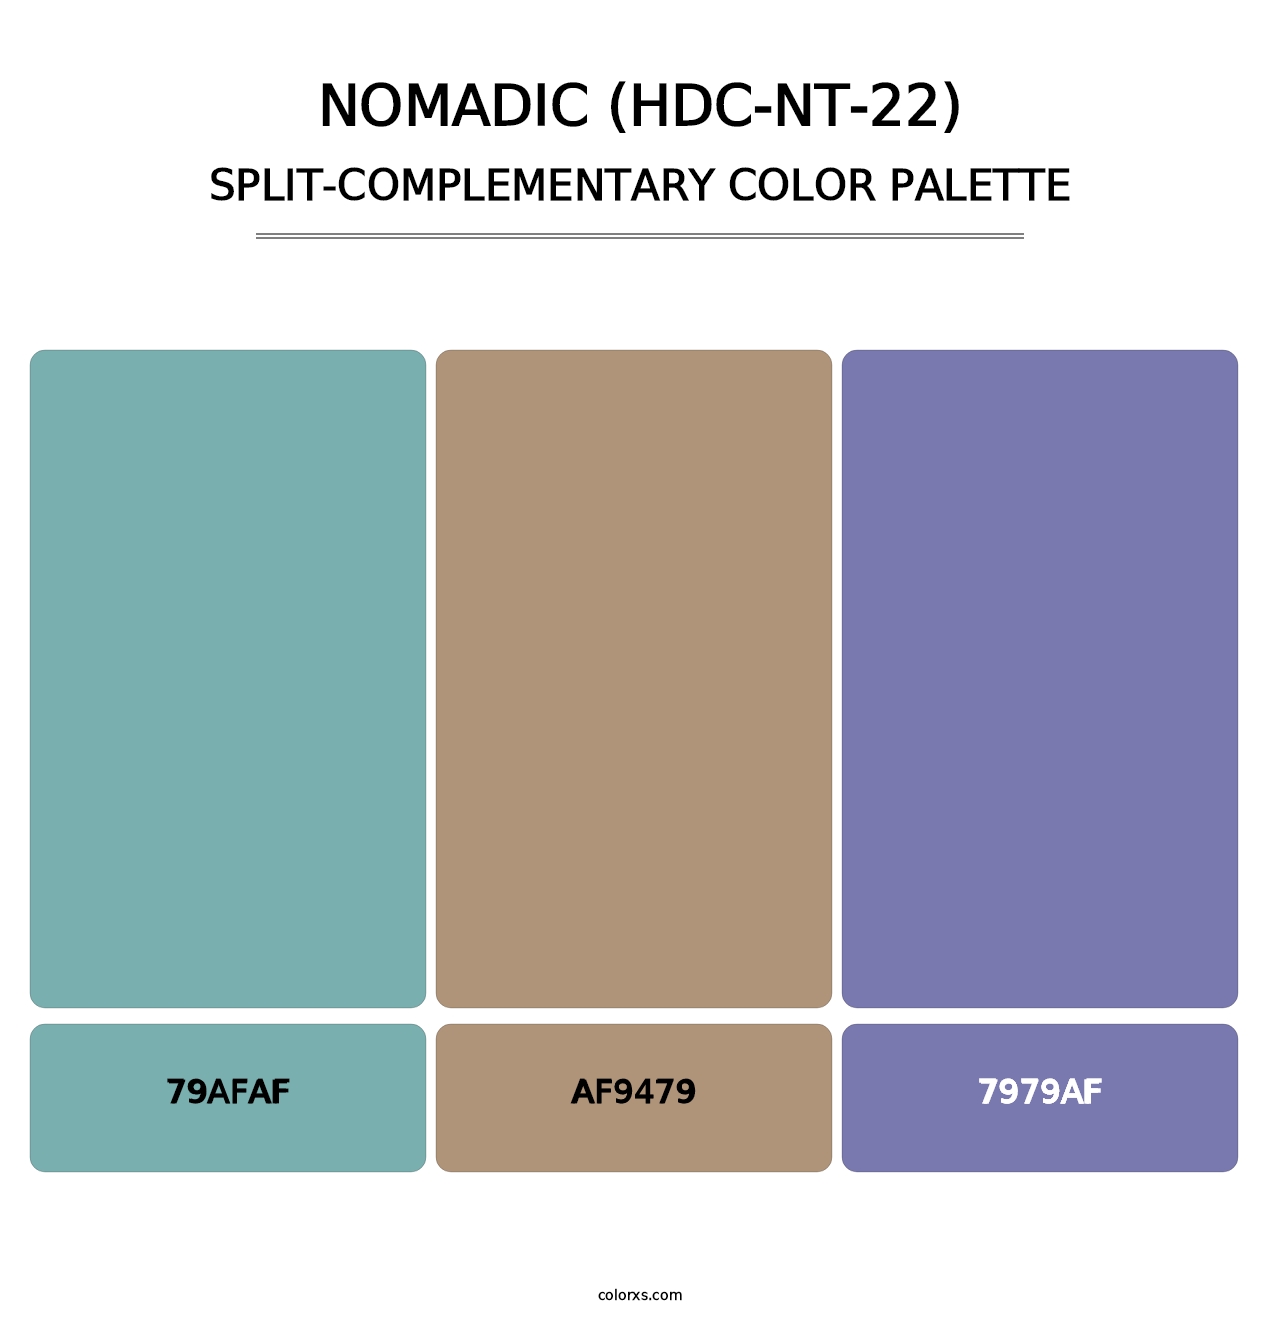 Nomadic (HDC-NT-22) - Split-Complementary Color Palette